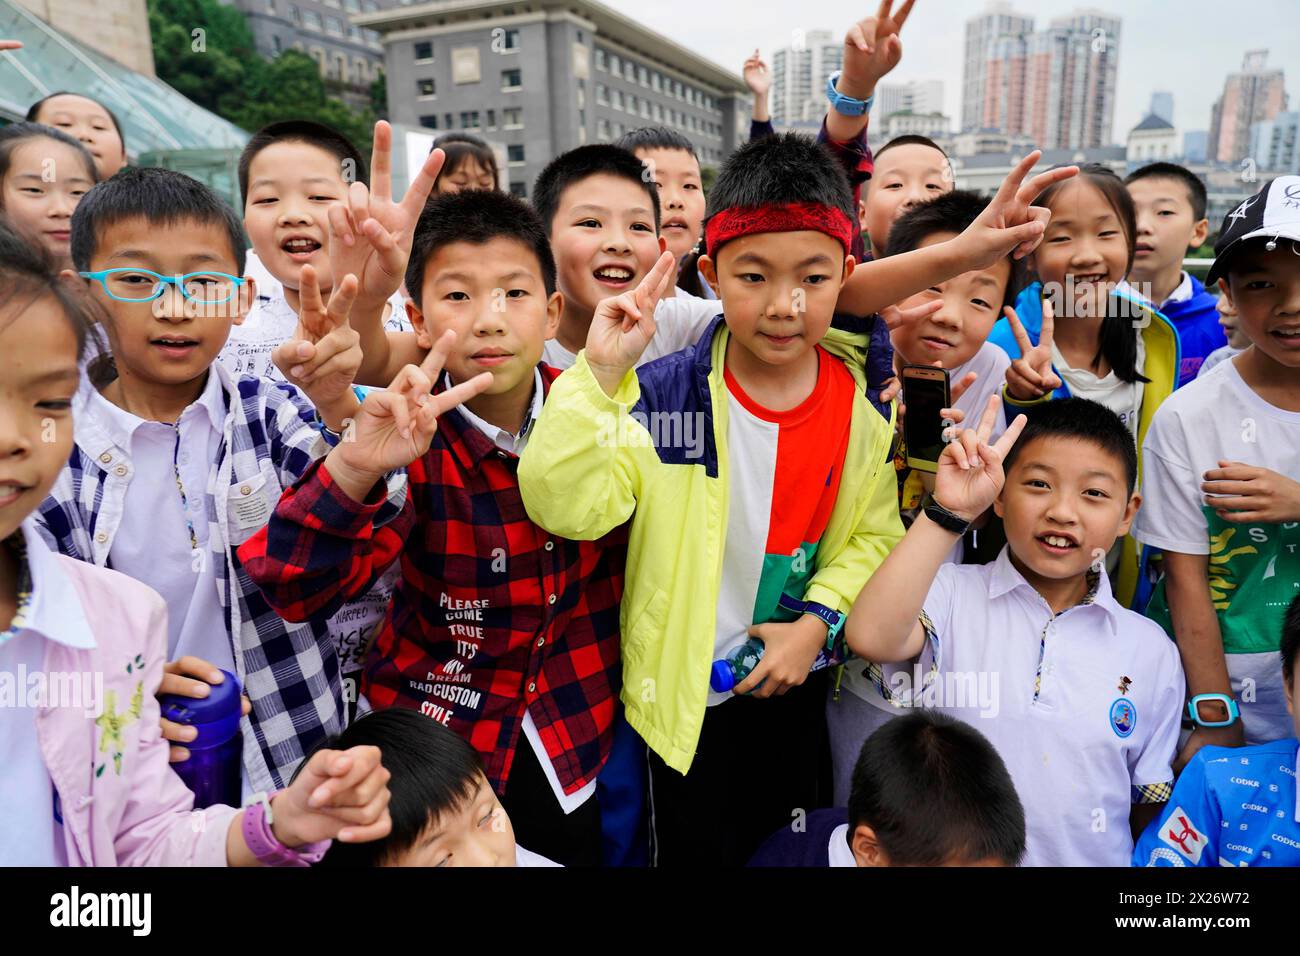 Chongqing, provincia di Chongqing, Cina, Asia, gruppo di studenti in abiti colorati mostrano gesti gioiosi durante una gita scolastica Foto Stock